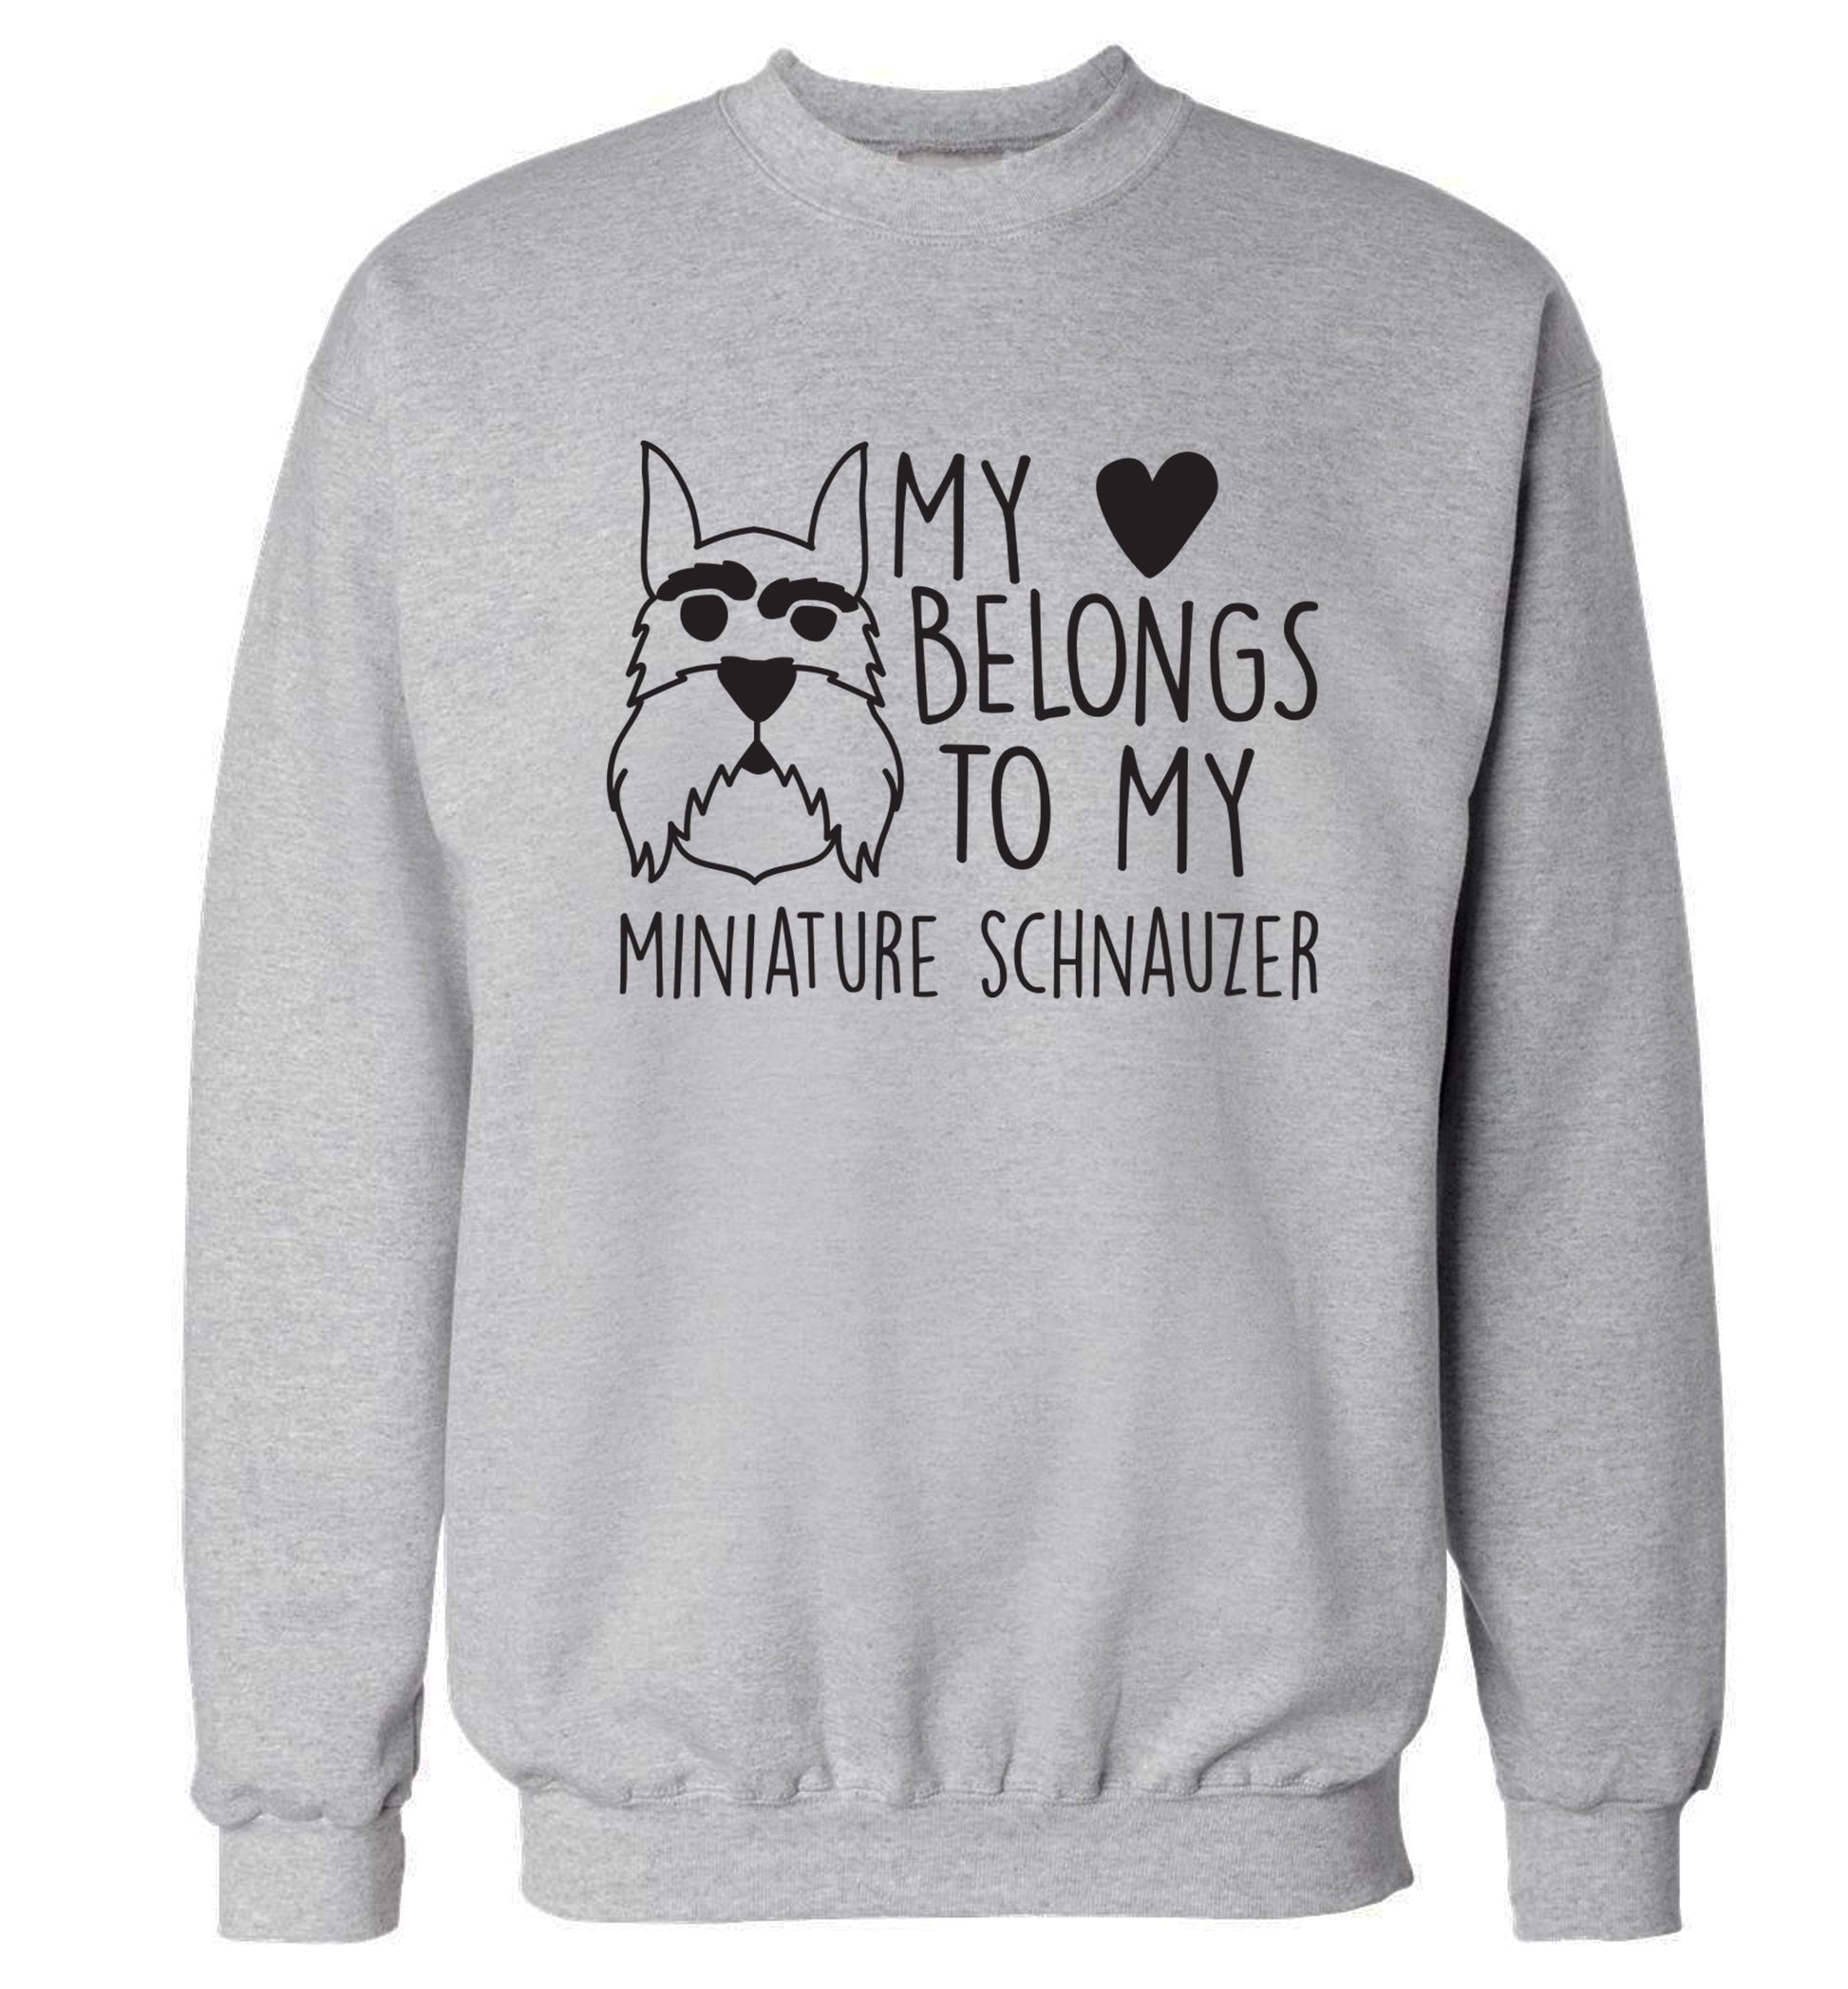 My heart belongs to my miniature schnauzer Adult's unisex grey Sweater 2XL